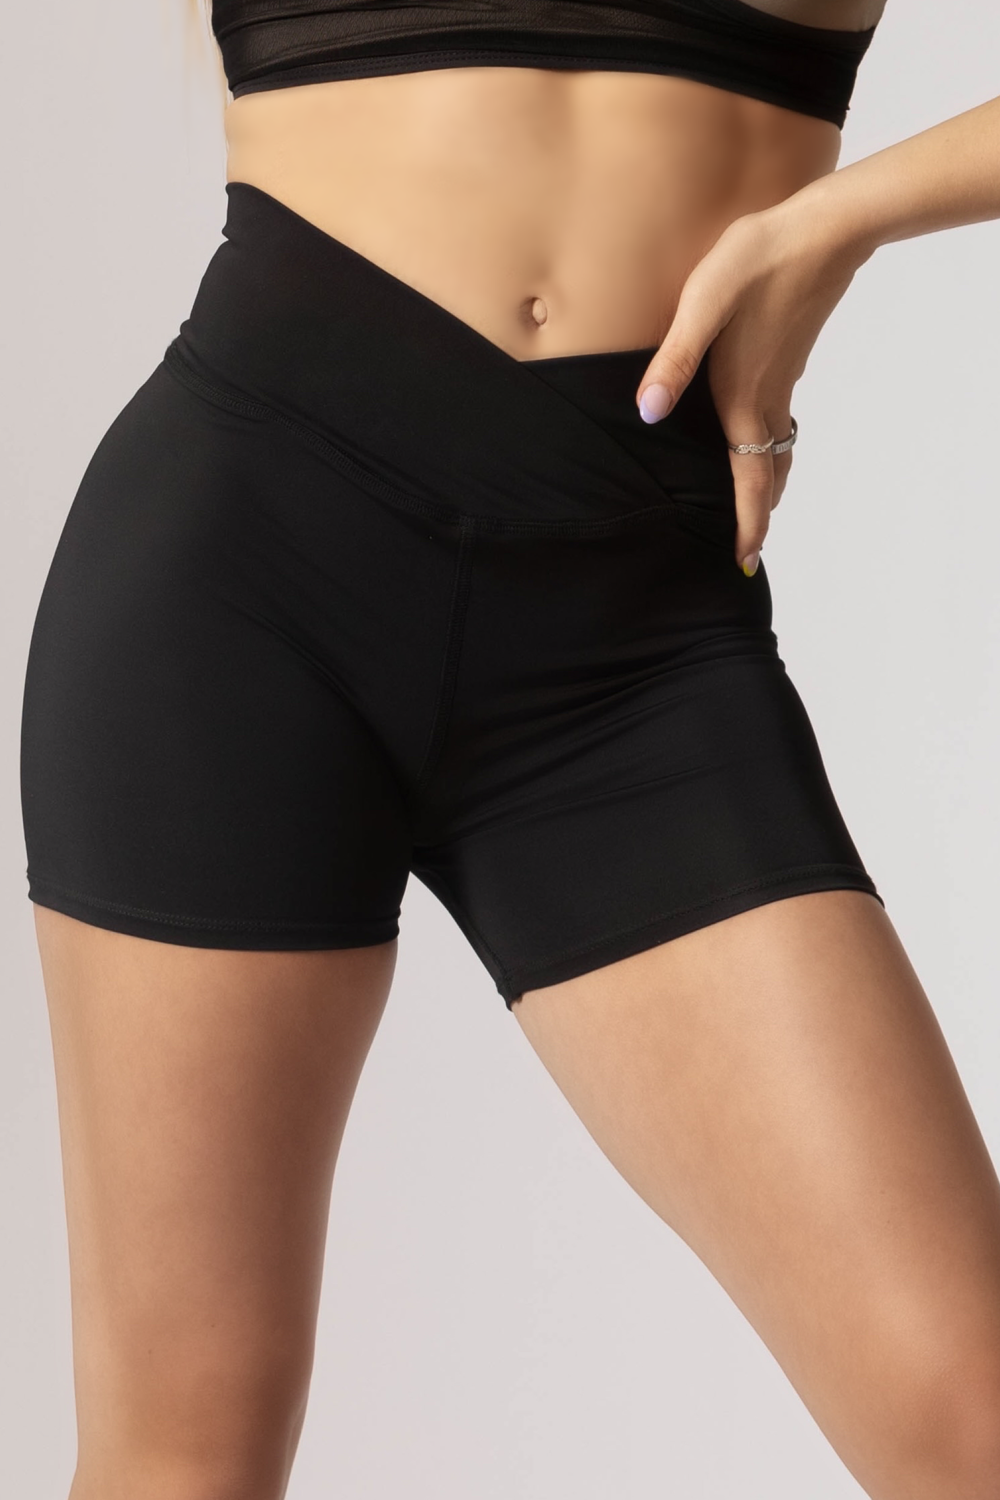 Tiger Friday Online Shop for Hot Cross Triker Shorts - Black Dancewear | Size: CXS